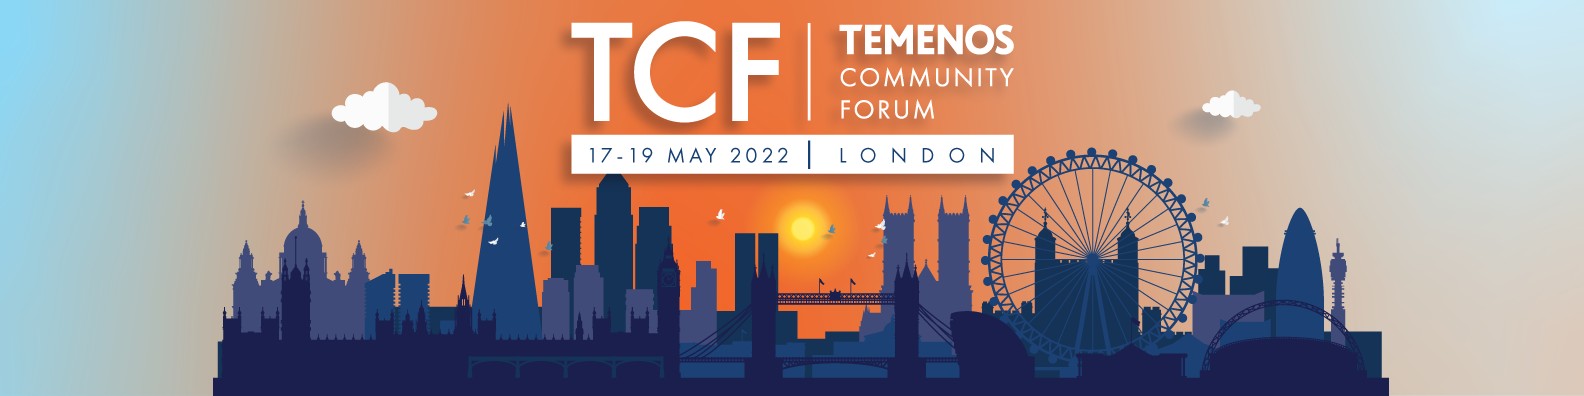 Temenos Community Forum 2022